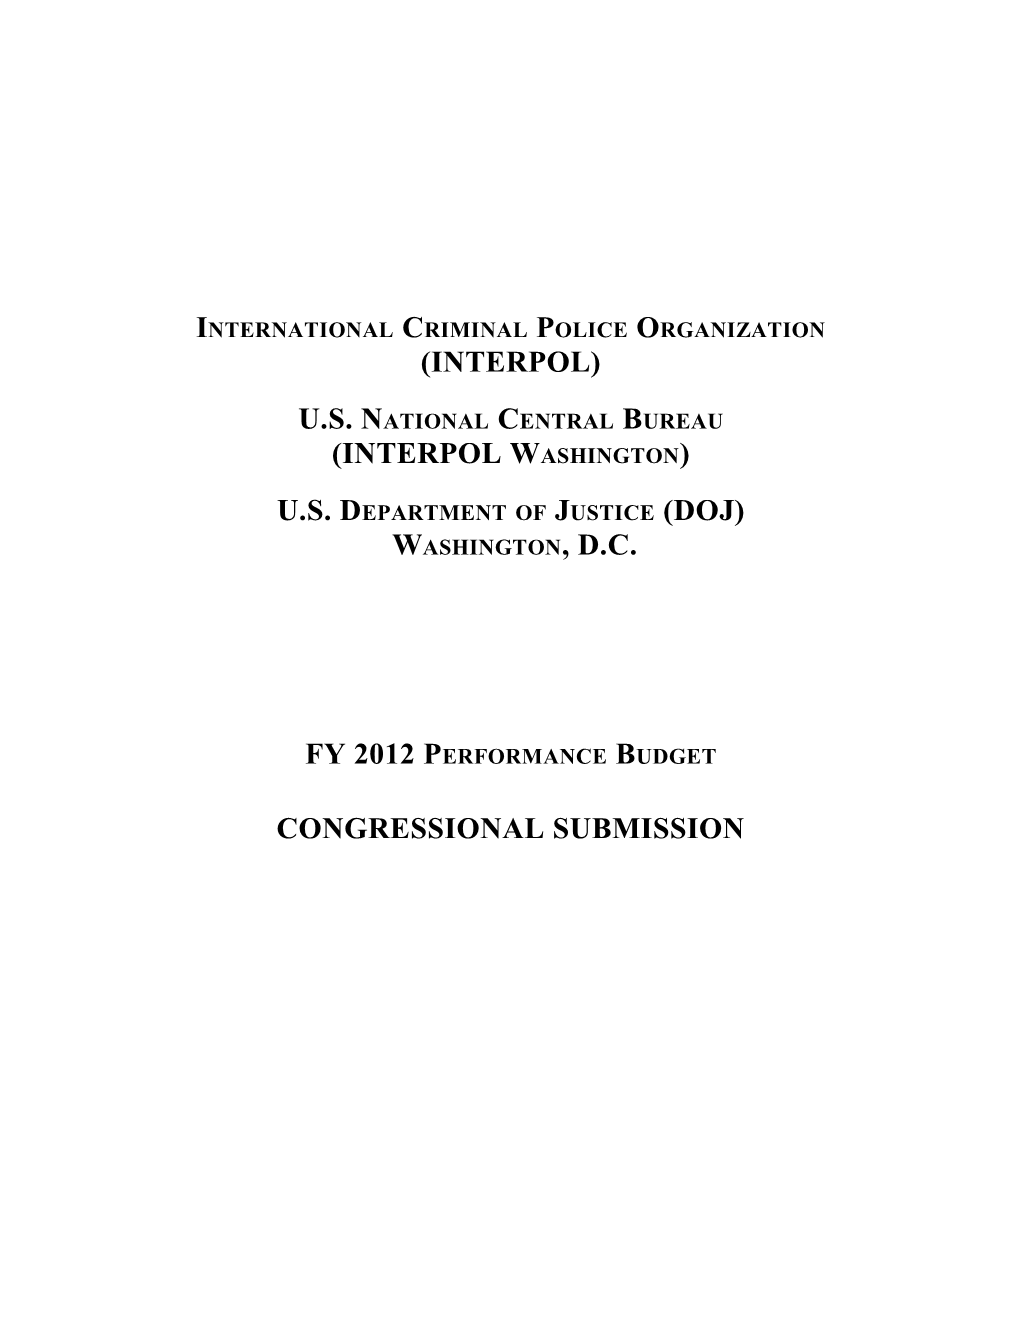 International Criminal Police Organization (Interpol)